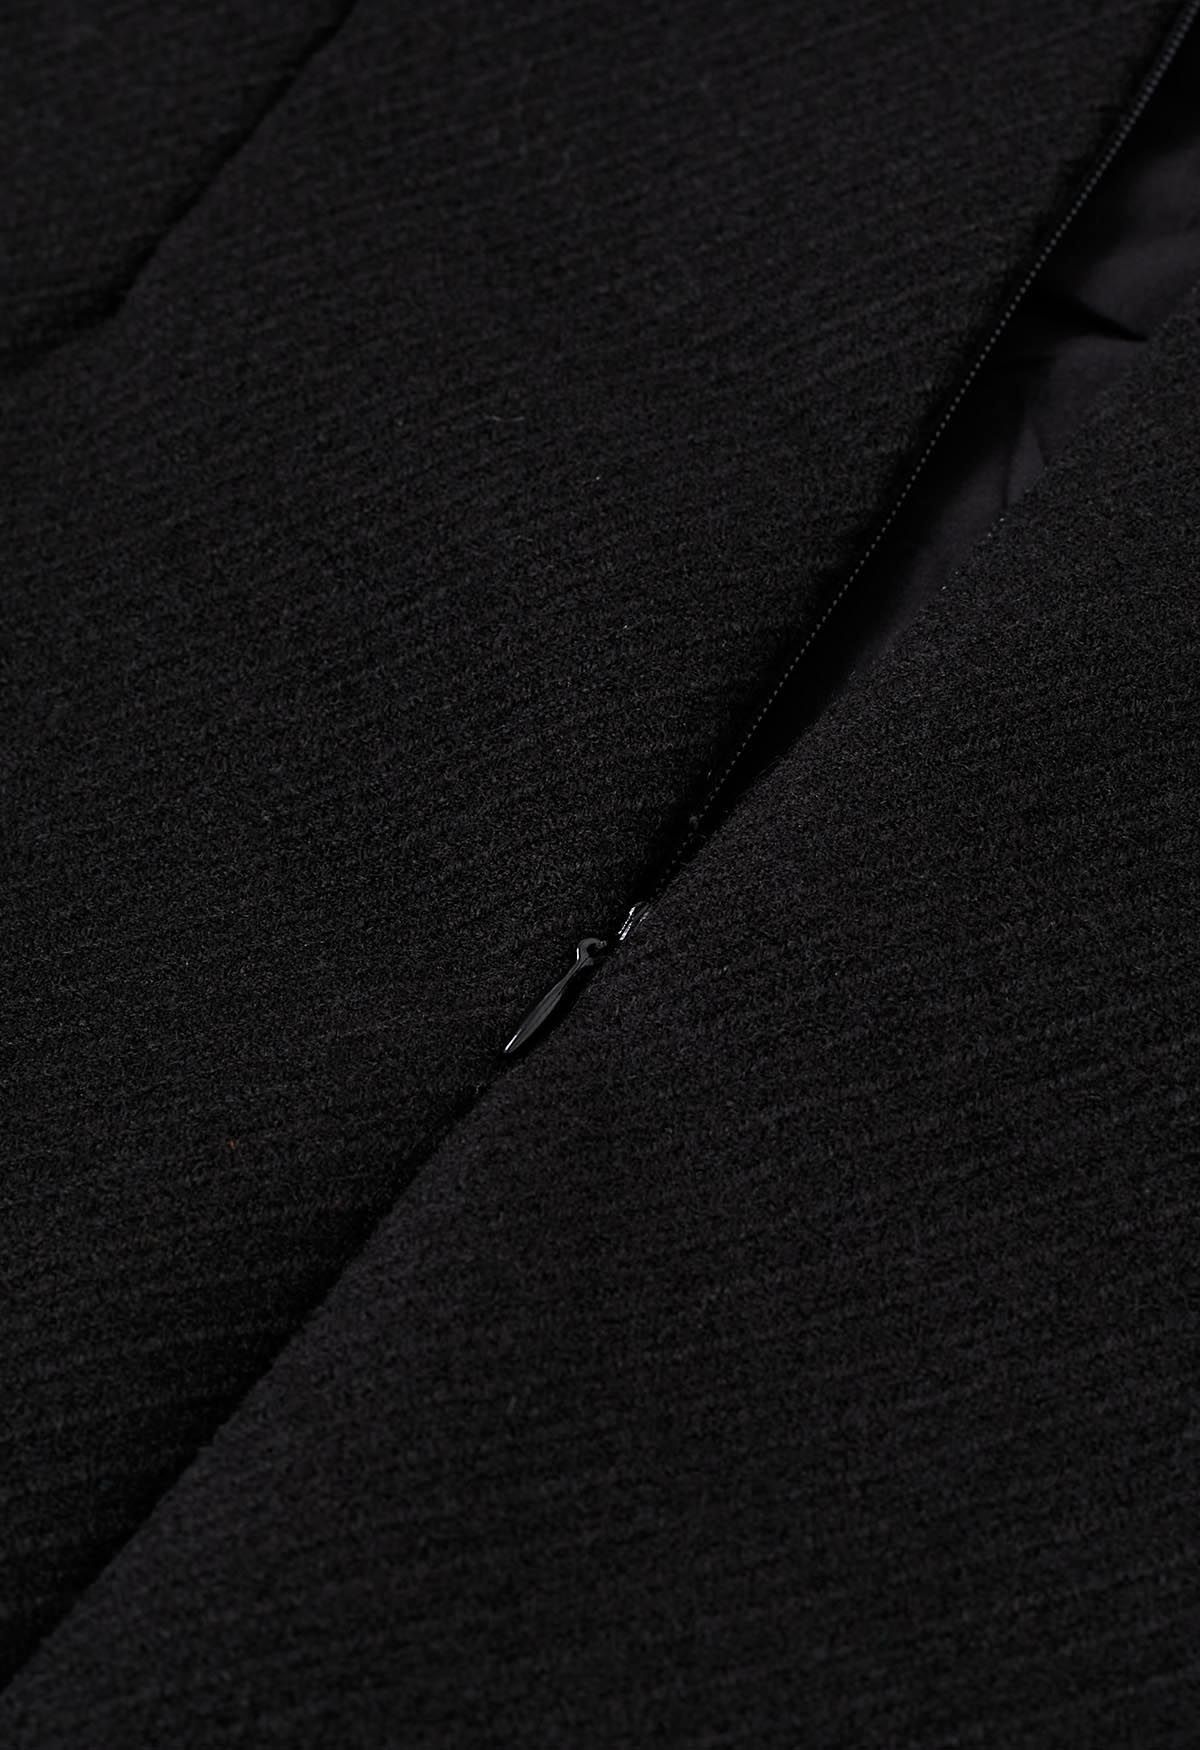 Notched Hem Wool-Blend Flap Mini Skirt in Black